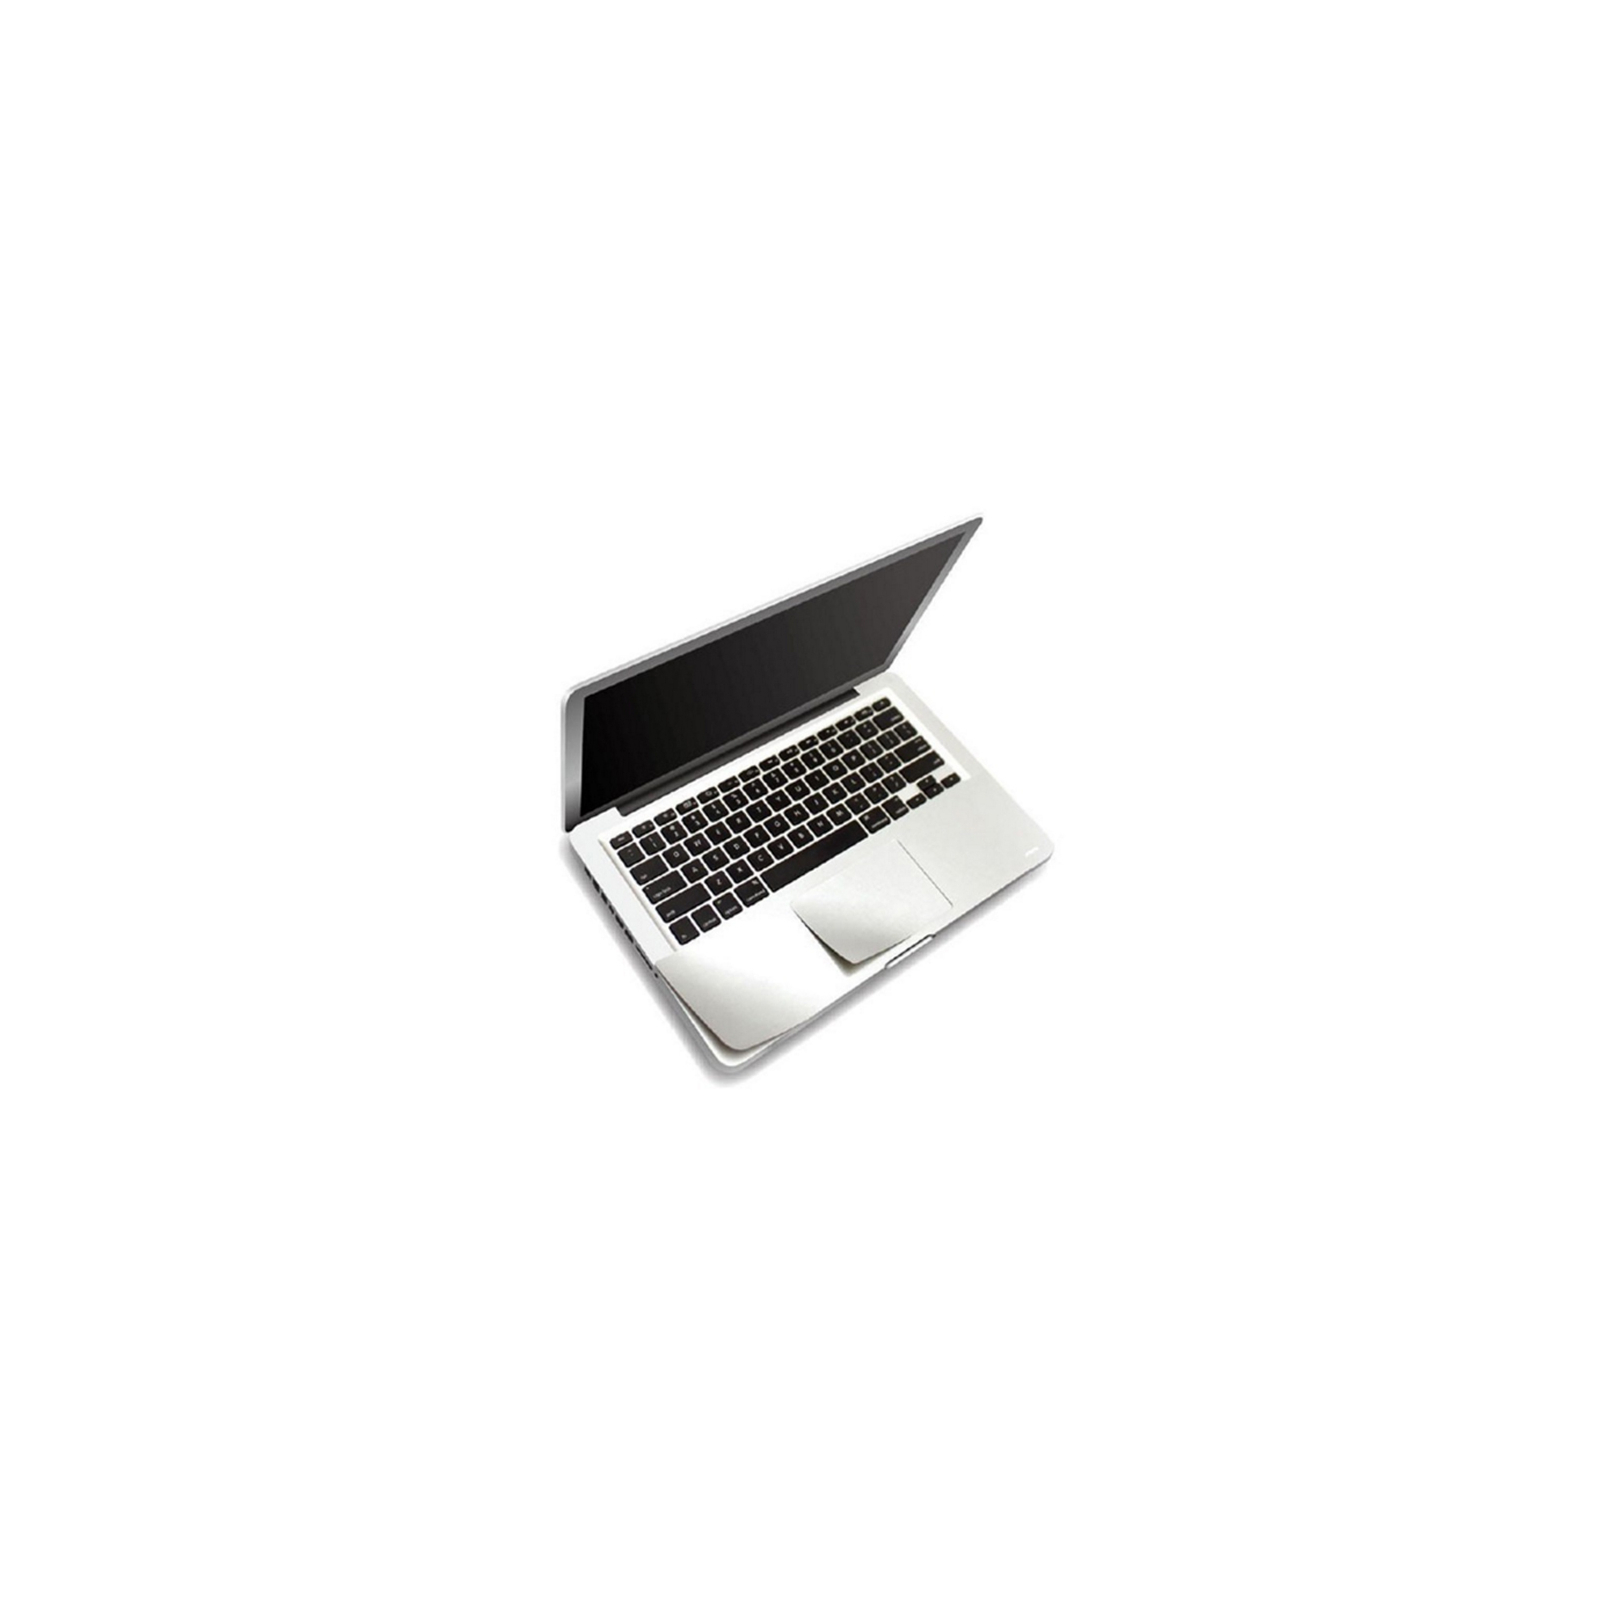 Пленка защитная JCPAL WristGuard Palm Guard для MacBook Pro 17 (JCP2016) изображение 3